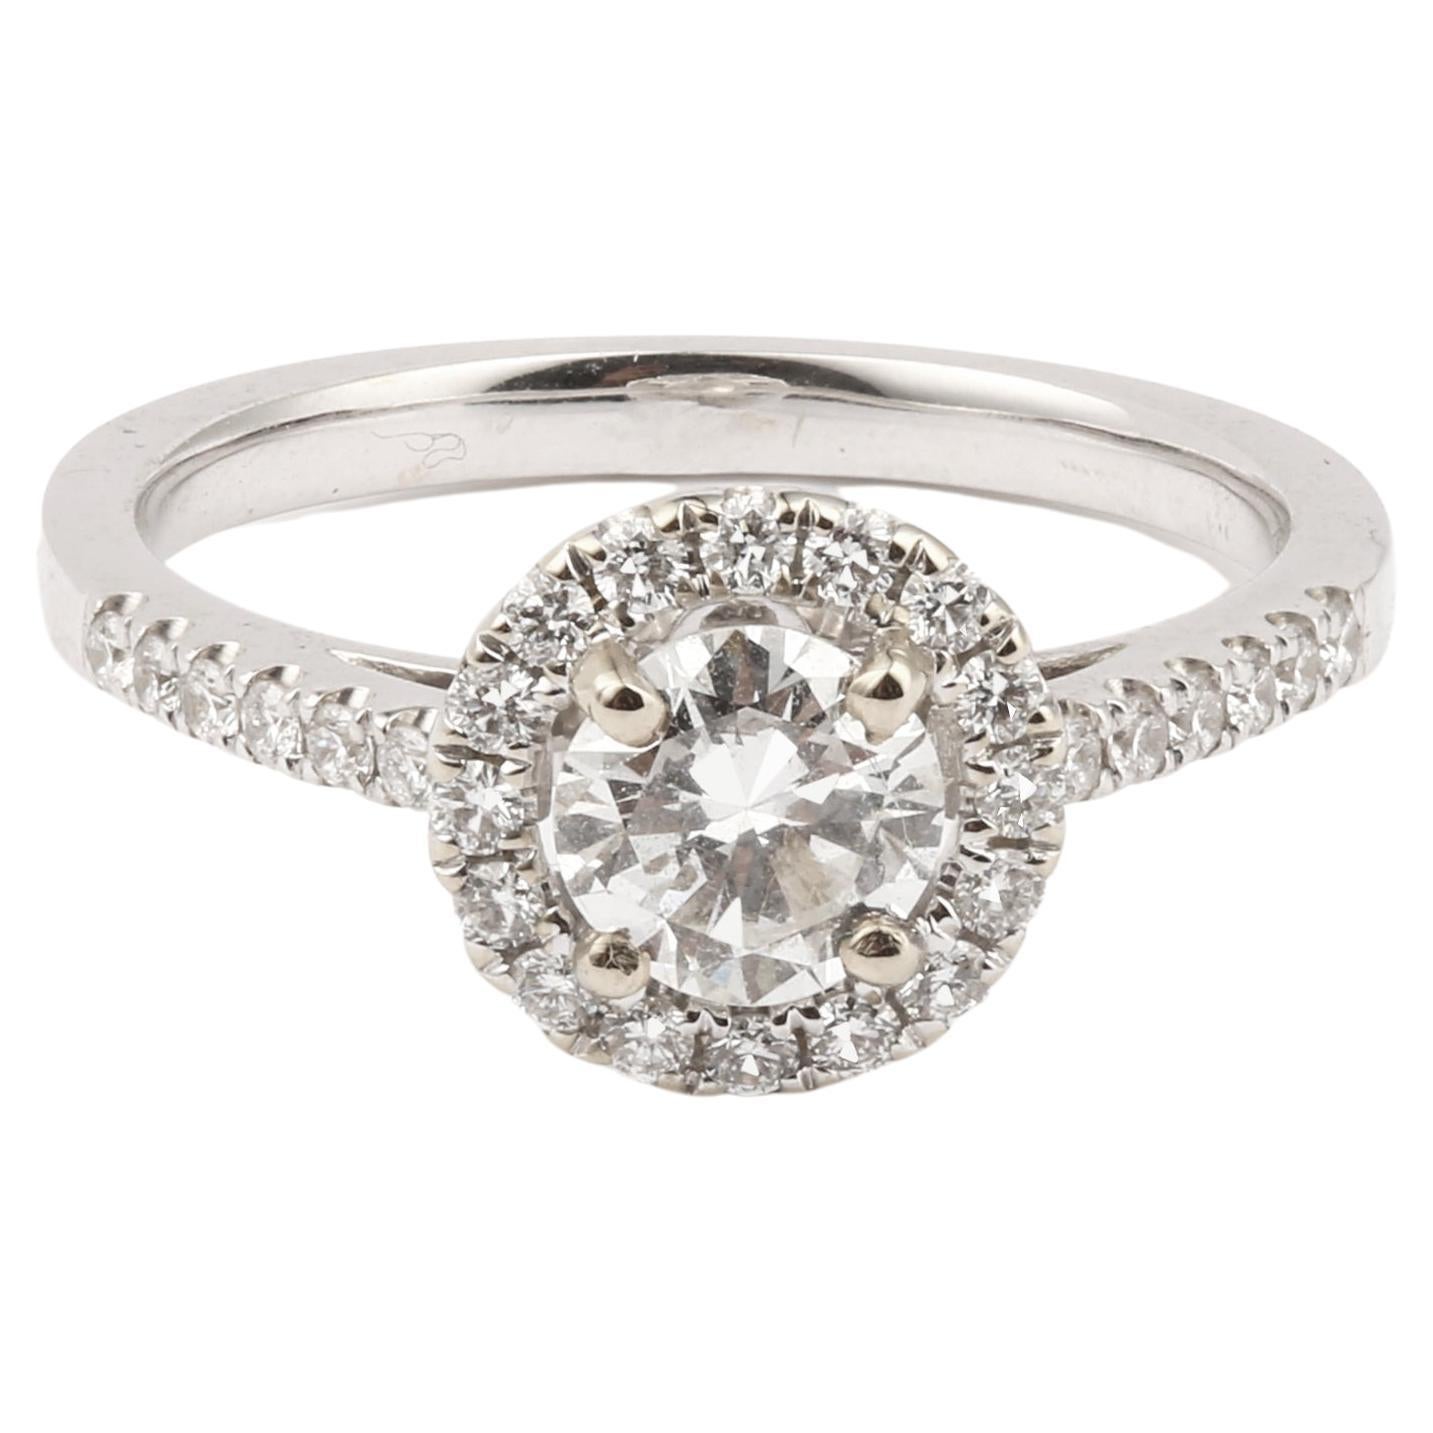 Certified 0.60 carats Diamonds 18-carat white gold Daisy Ring